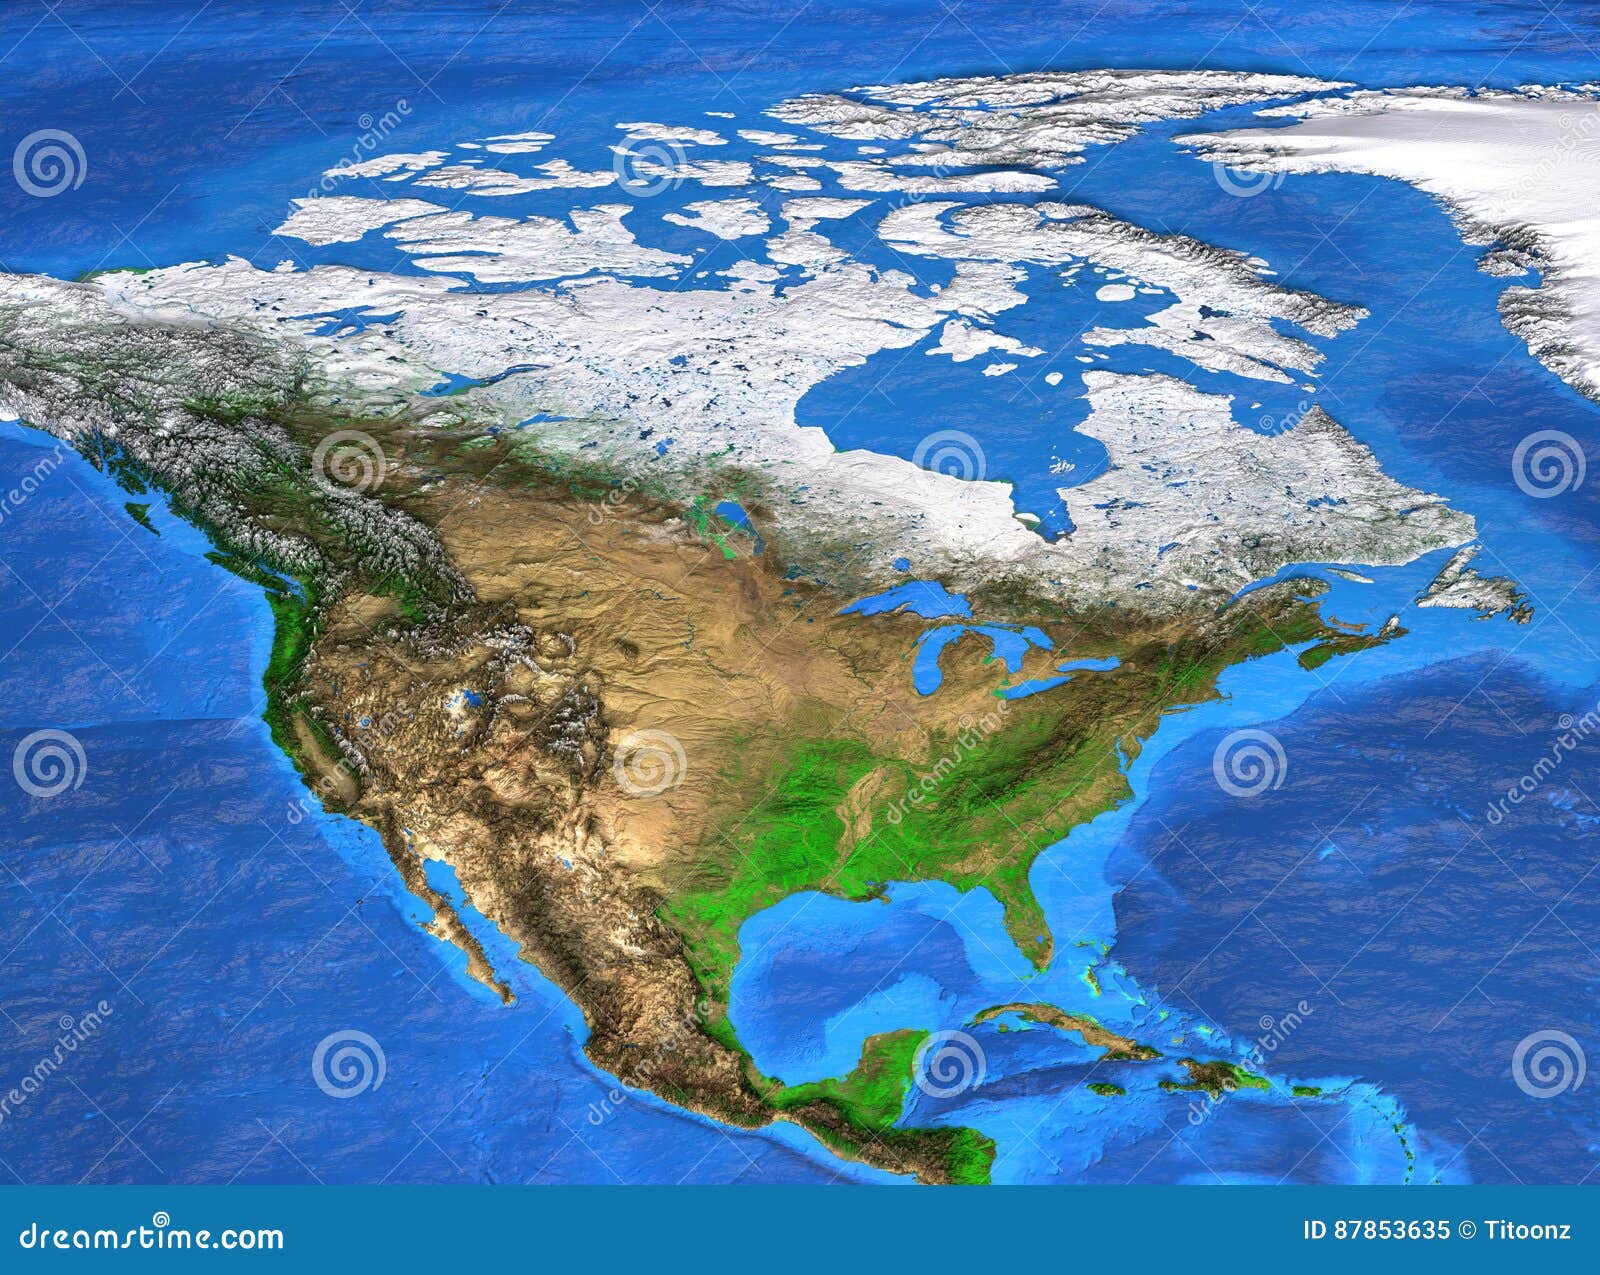 high resolution world map focused on north america